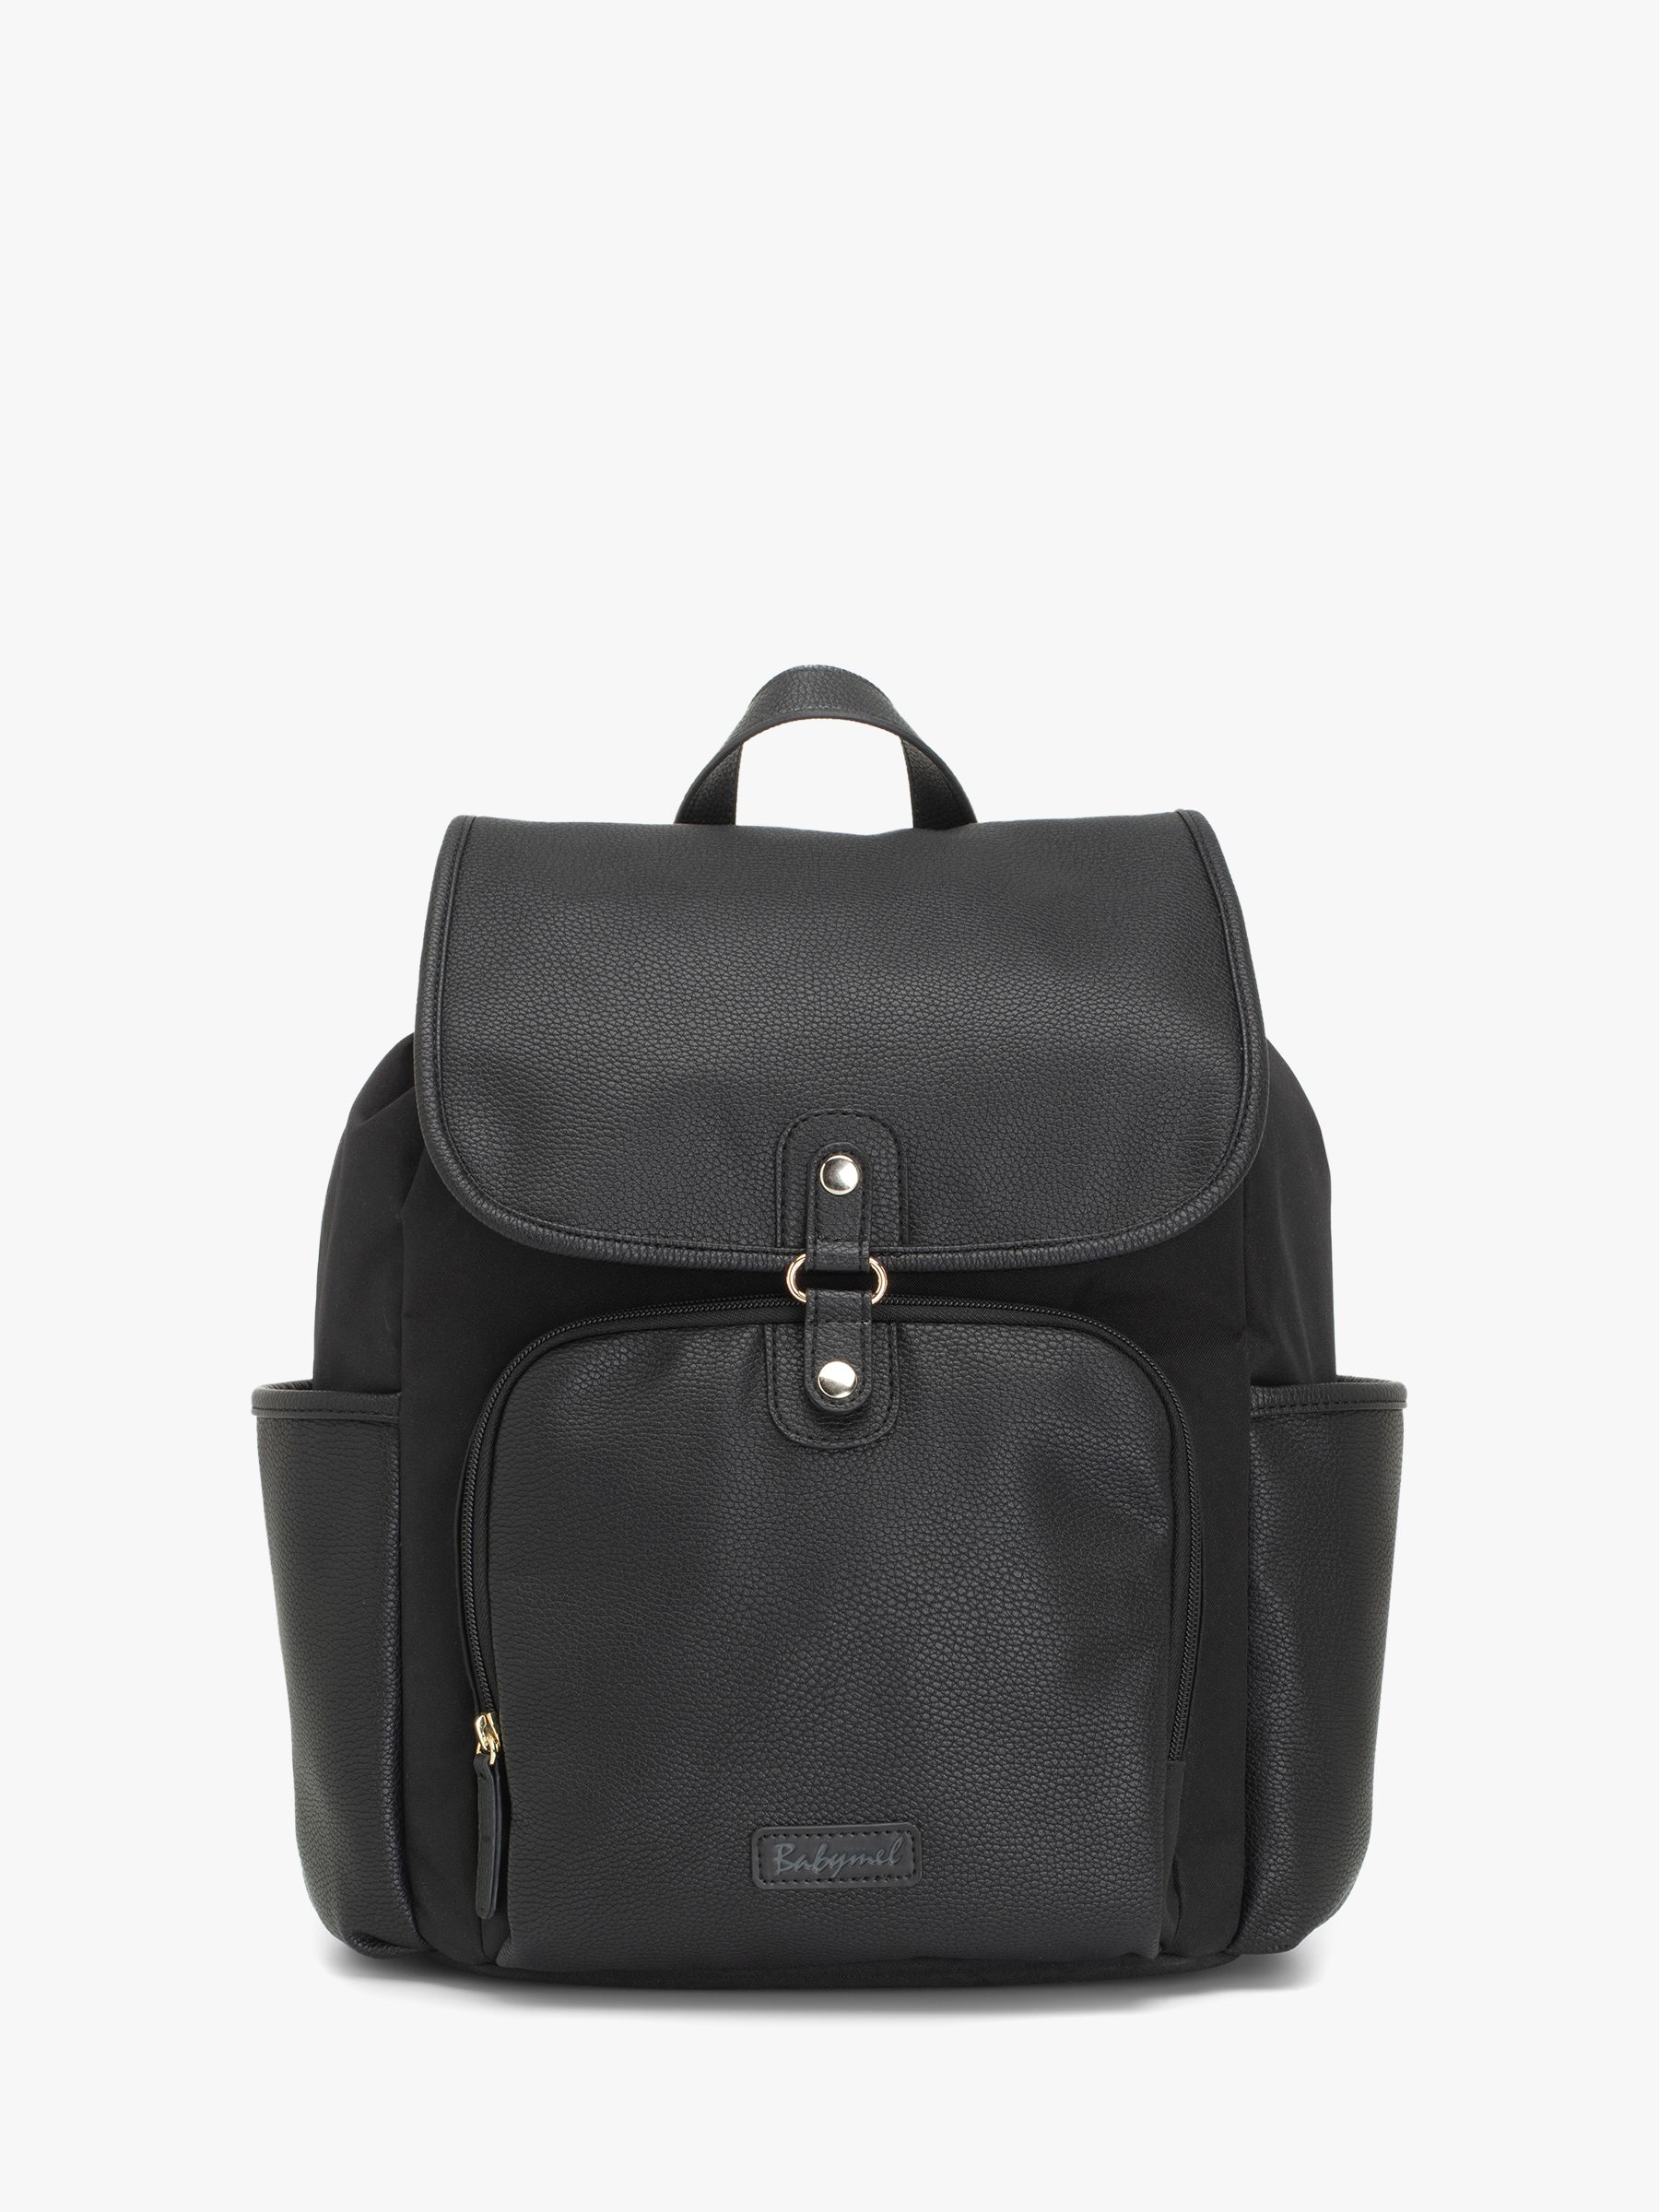 Babymel Freddie Backpack Changing Bag, Black